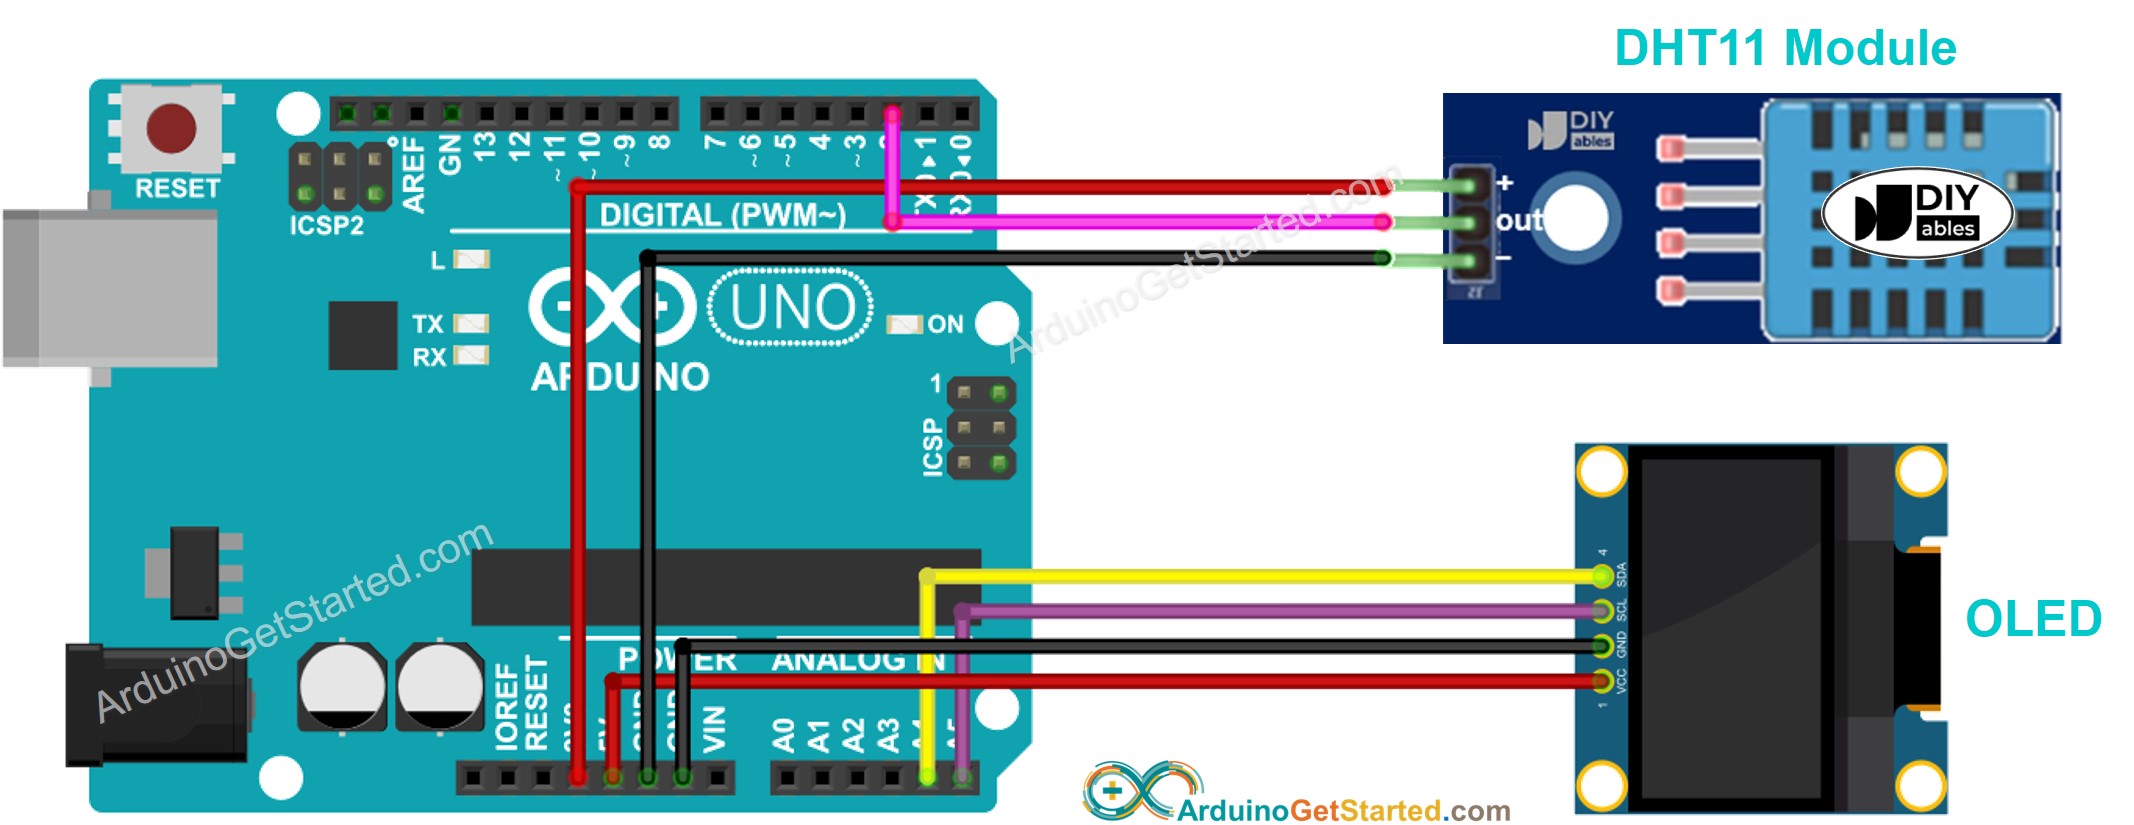 Arduino DHT11 module OLED Wiring Diagram